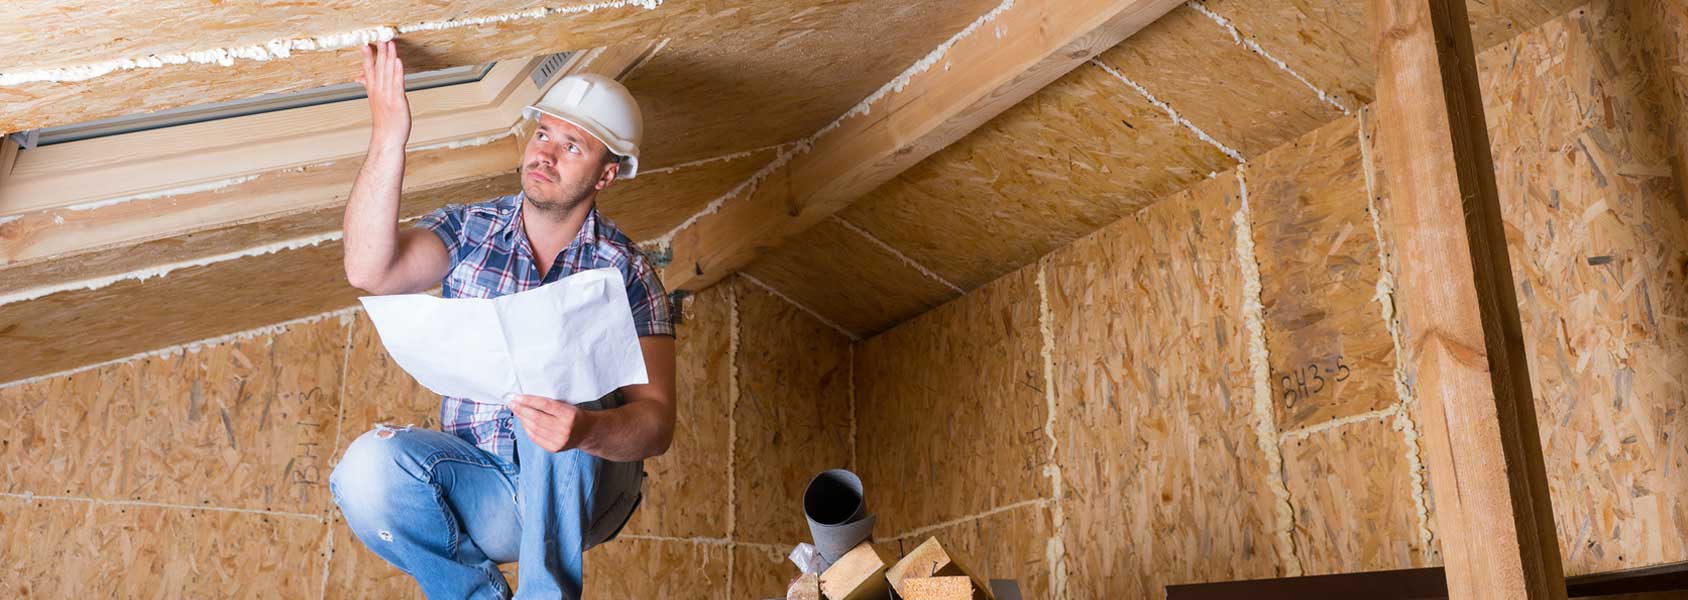 Man inspecting attic area